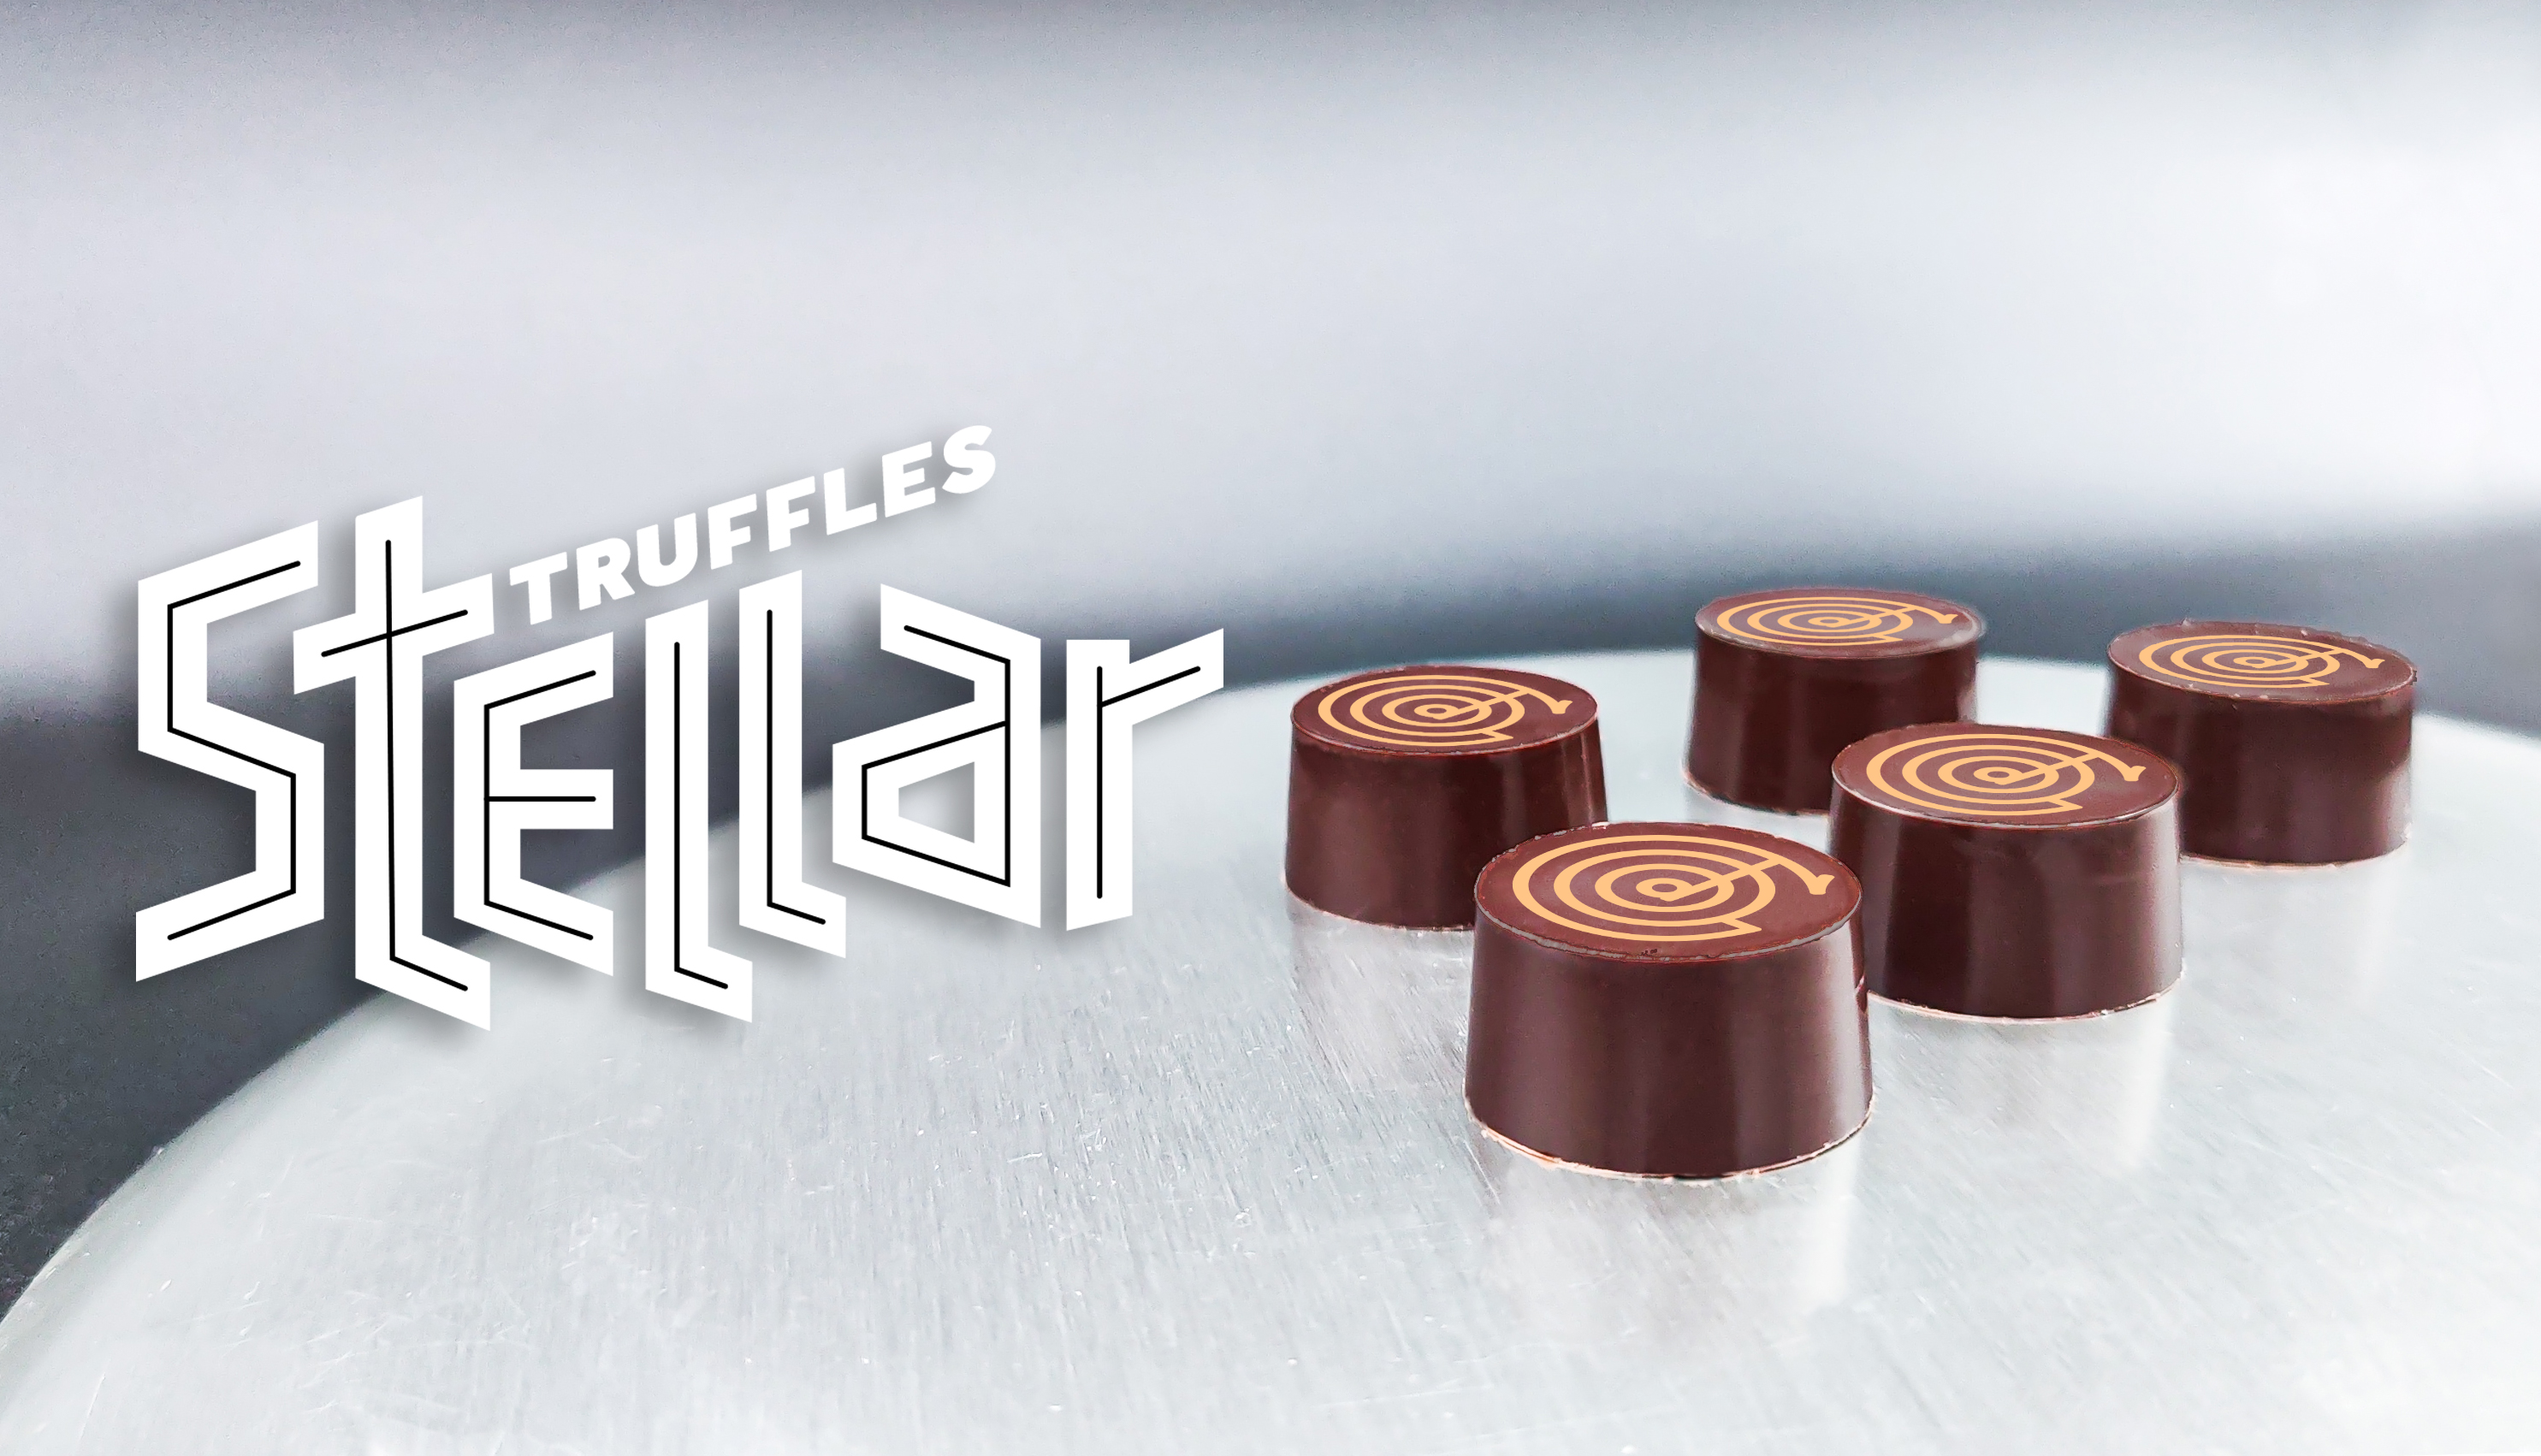 Stellar Truffles from The Good Chocolate